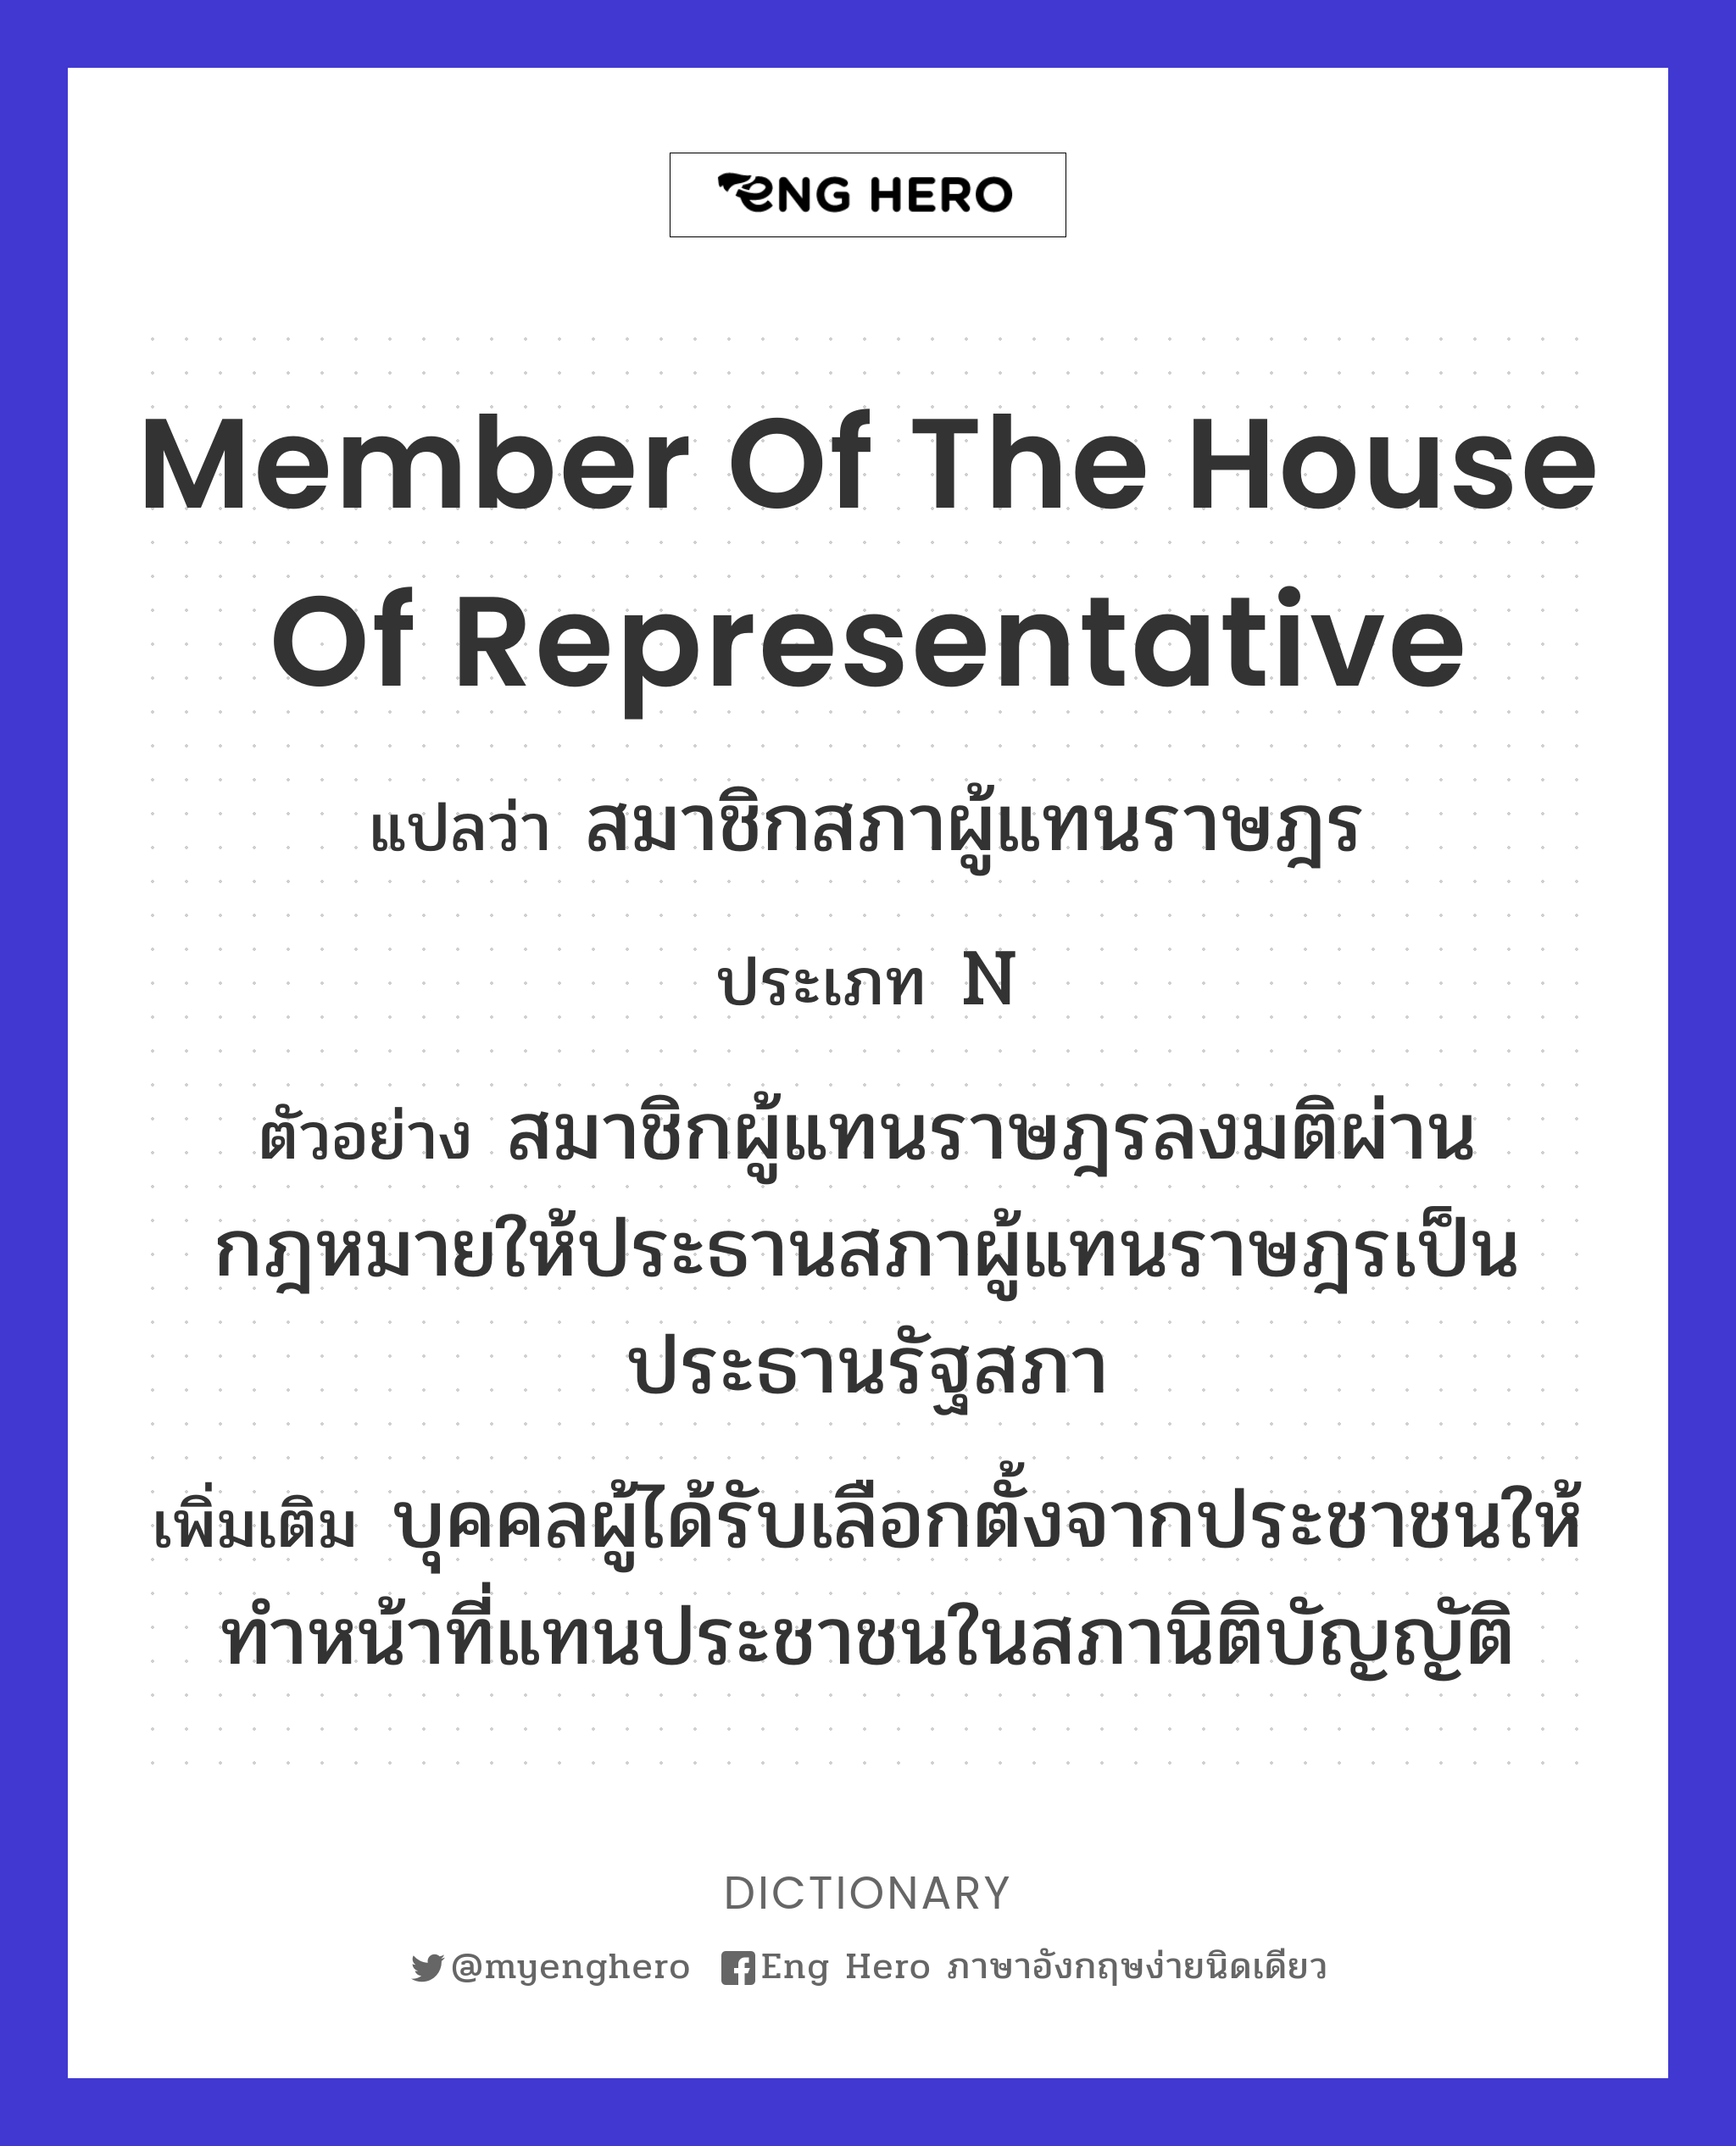 Member of the House of Representative